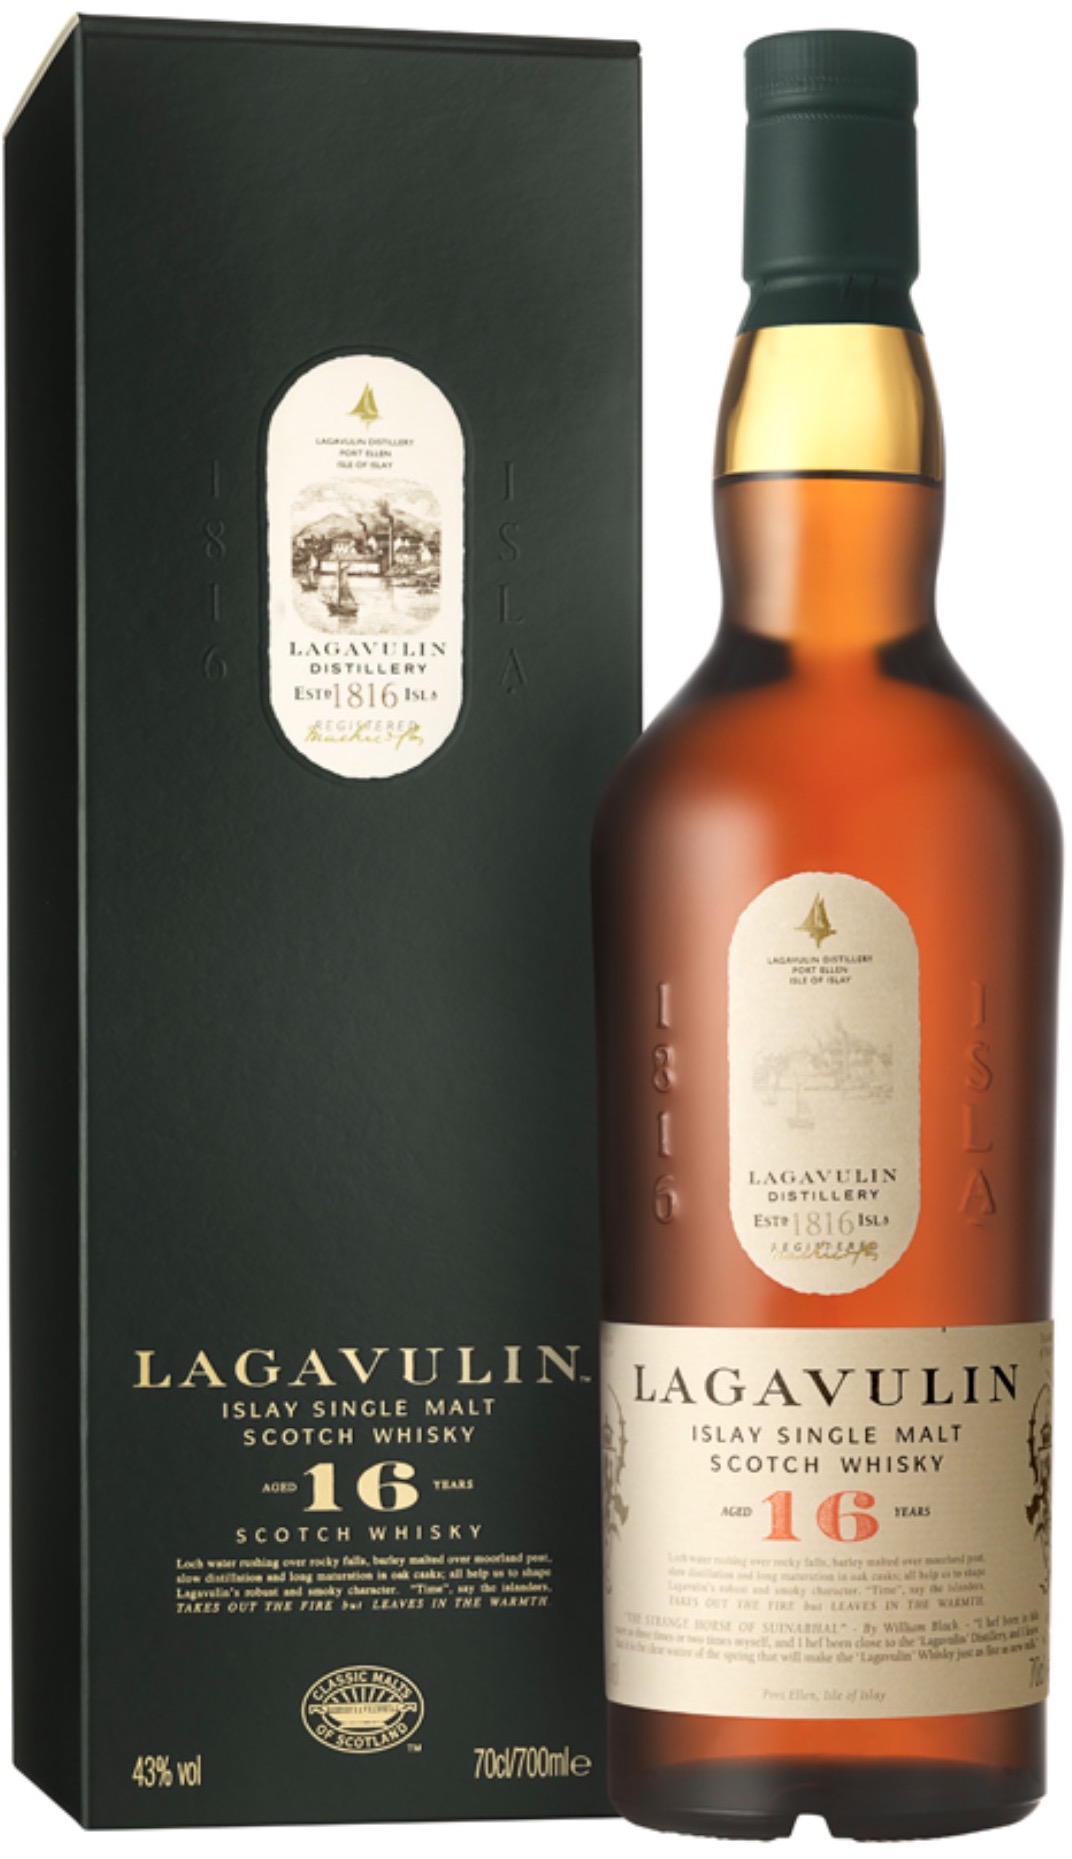 Lagavulin Islay Single Malt Scotch Whisky 16 Jahre 43% vol. 0,7L